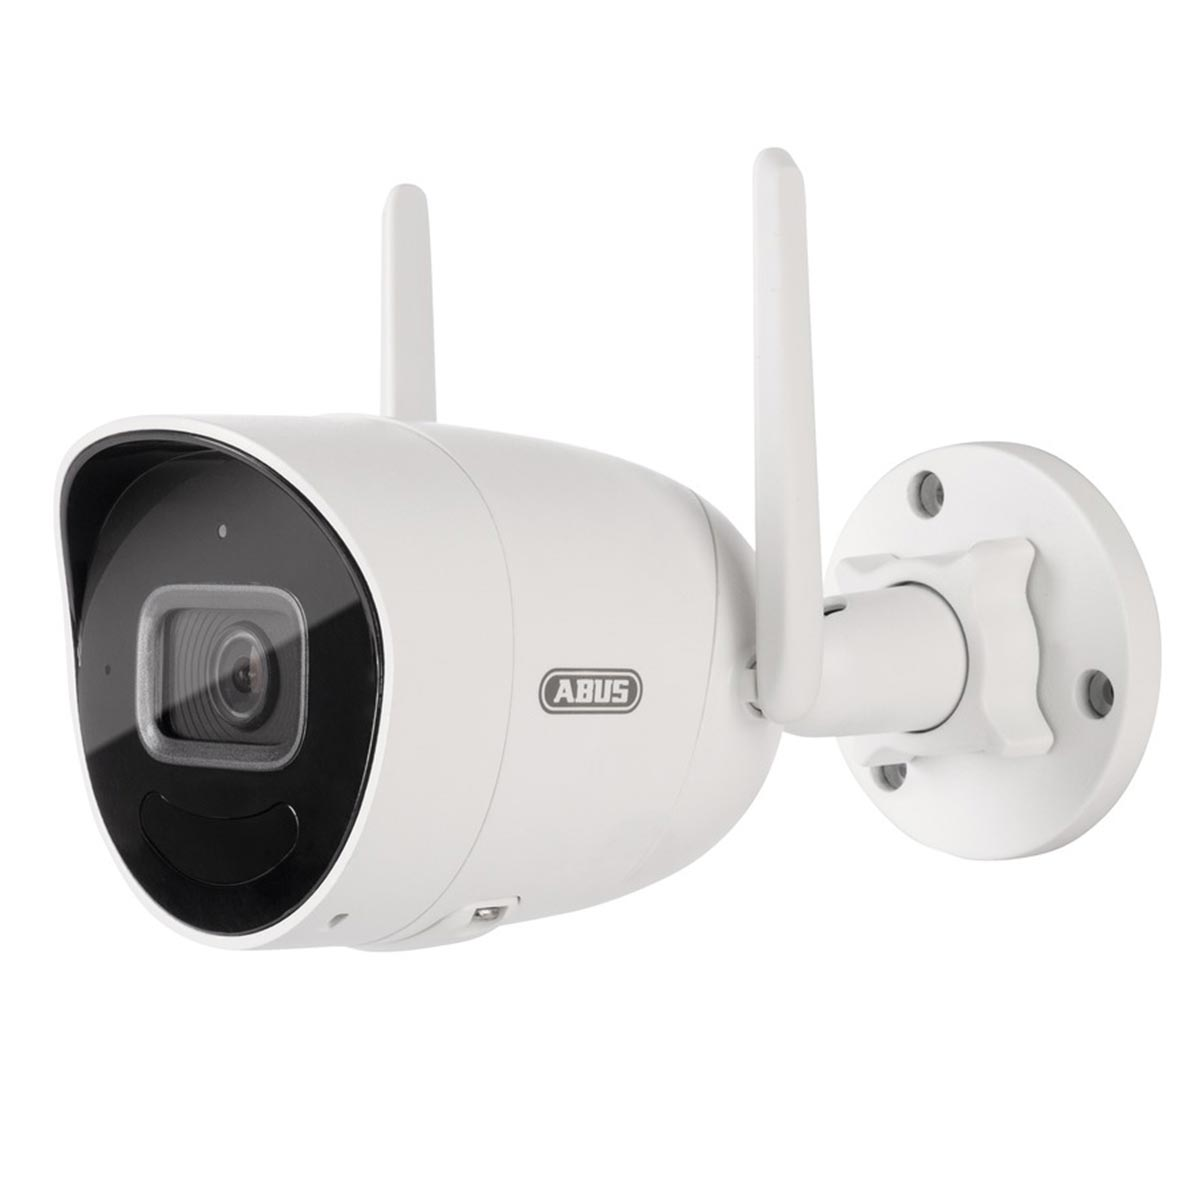 ABUS TVIP62562, ABUS Netzwerk-Überwachungskamera